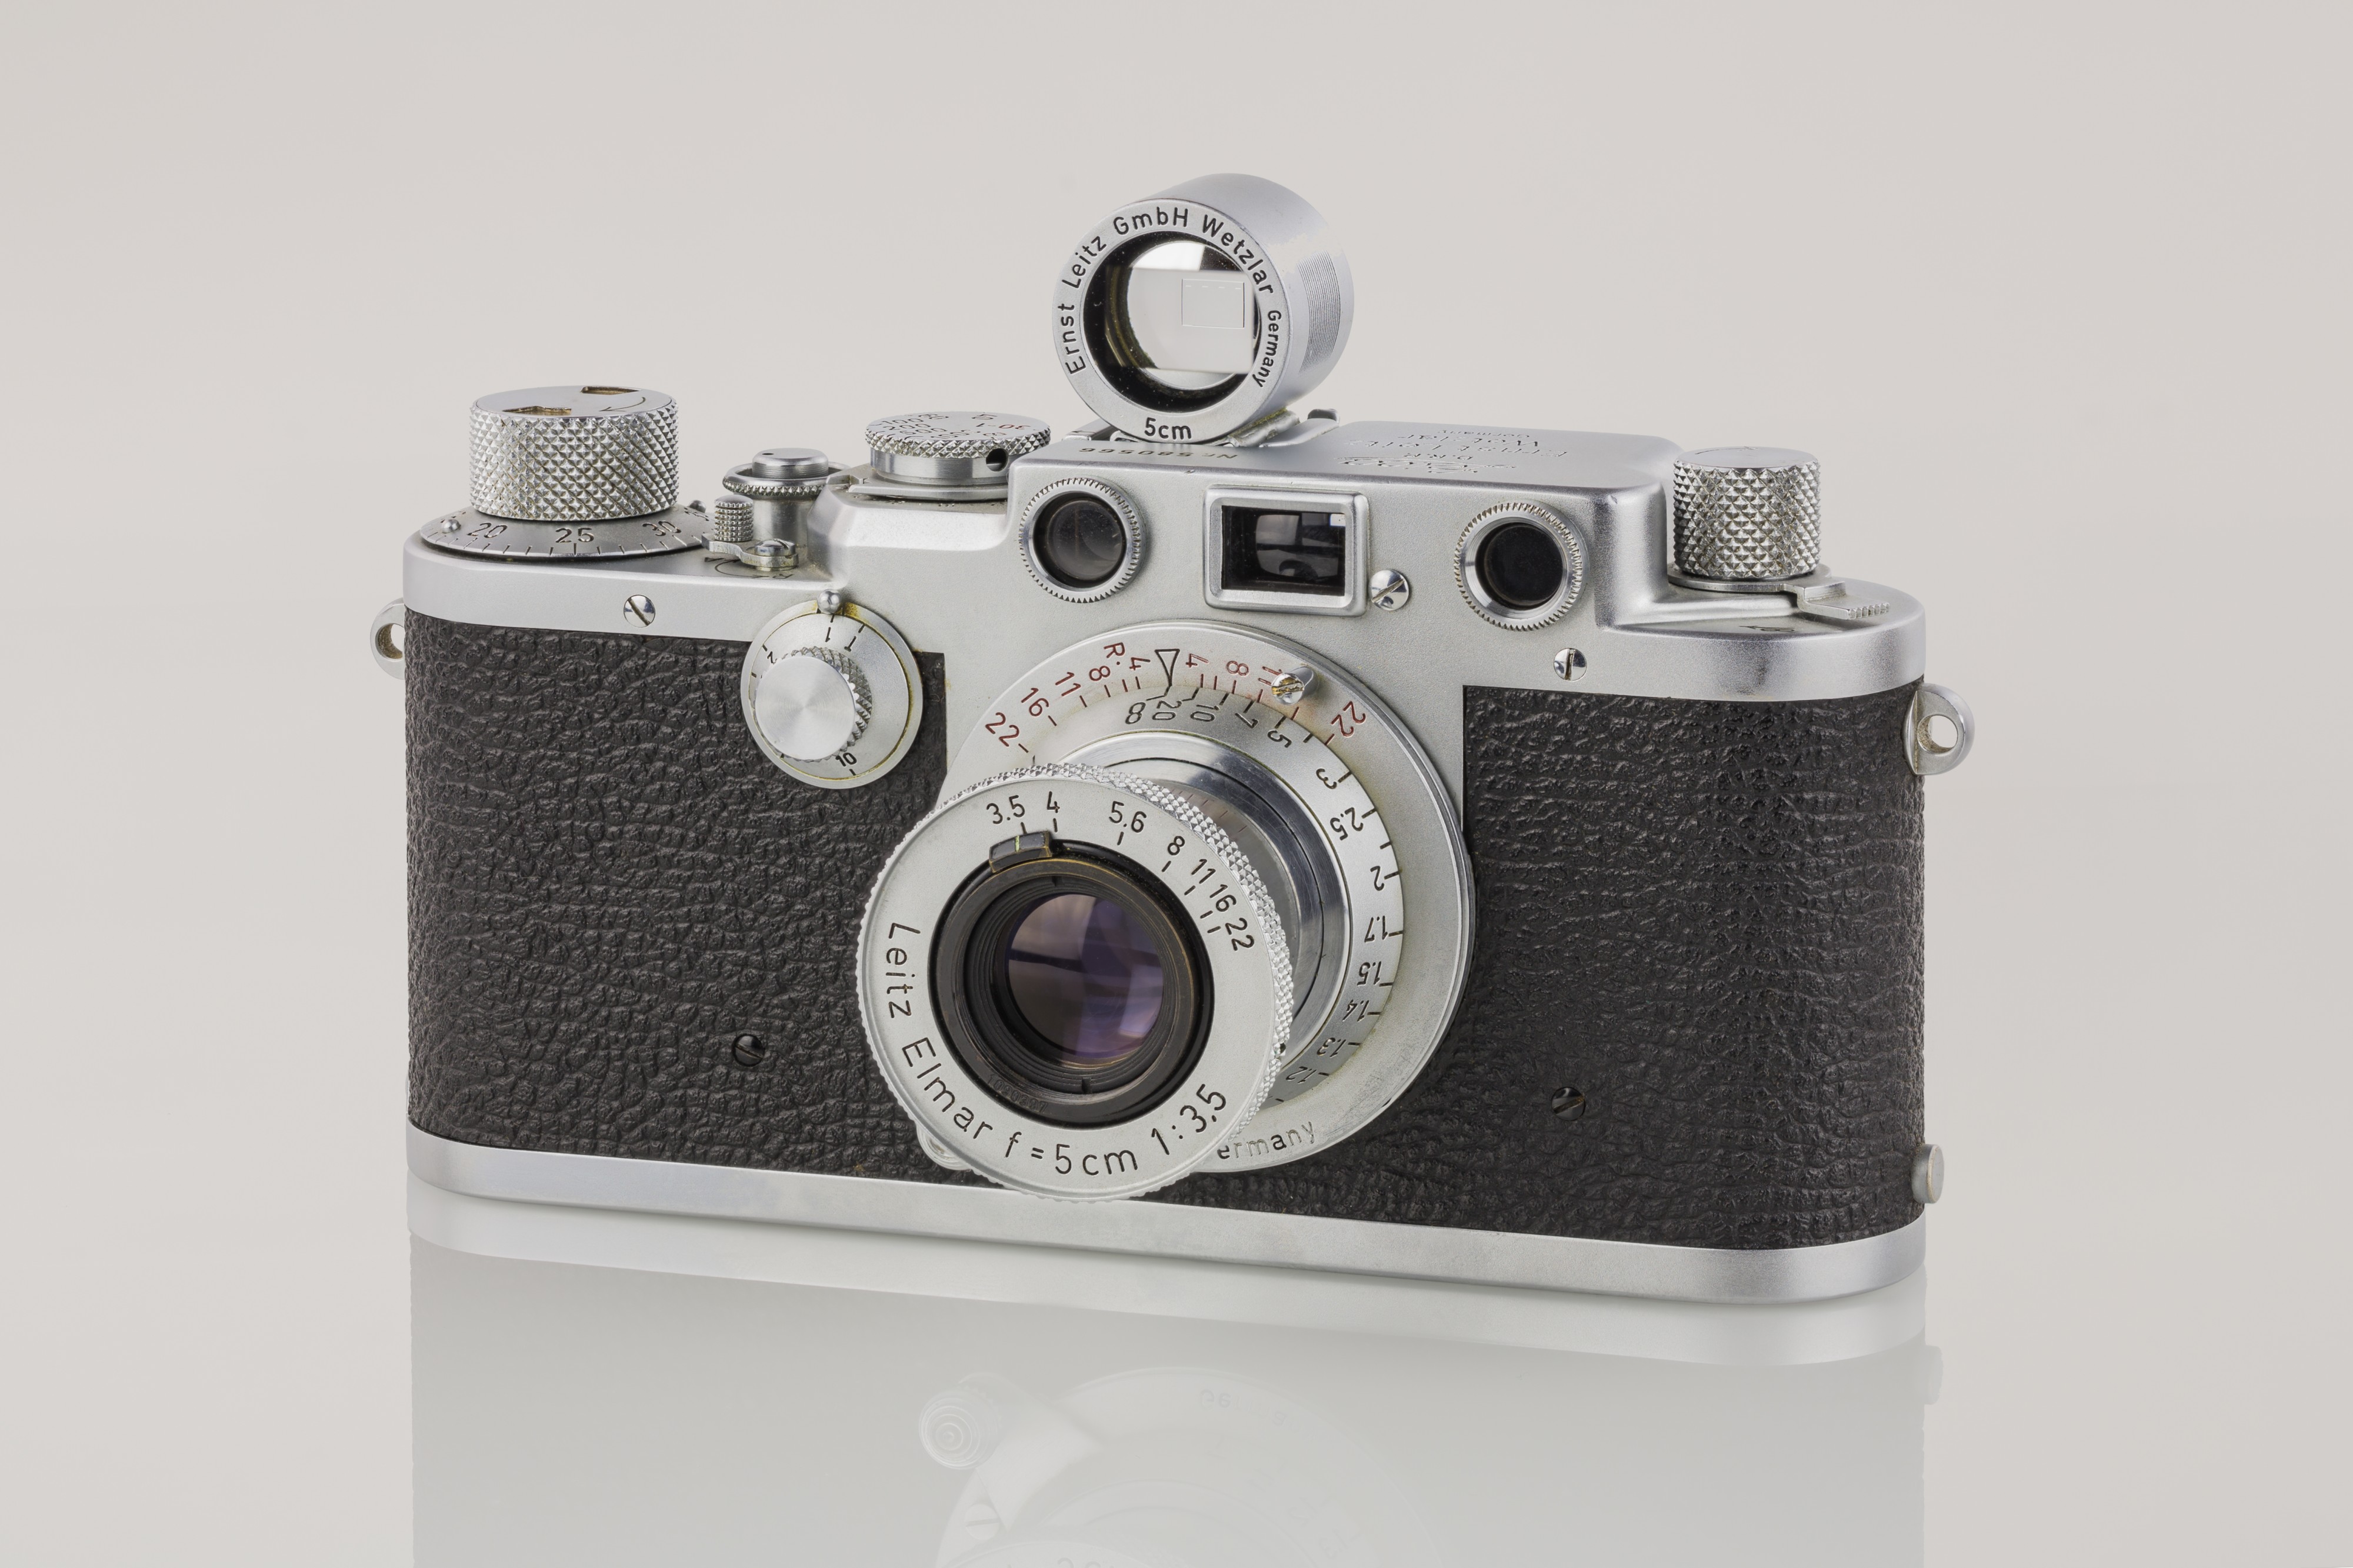 LEI0440 Leica IIIf chrom - Sn. 580566 1951-52-M39 Blitzsynchron front view Aufstecksucher-6548 hf-